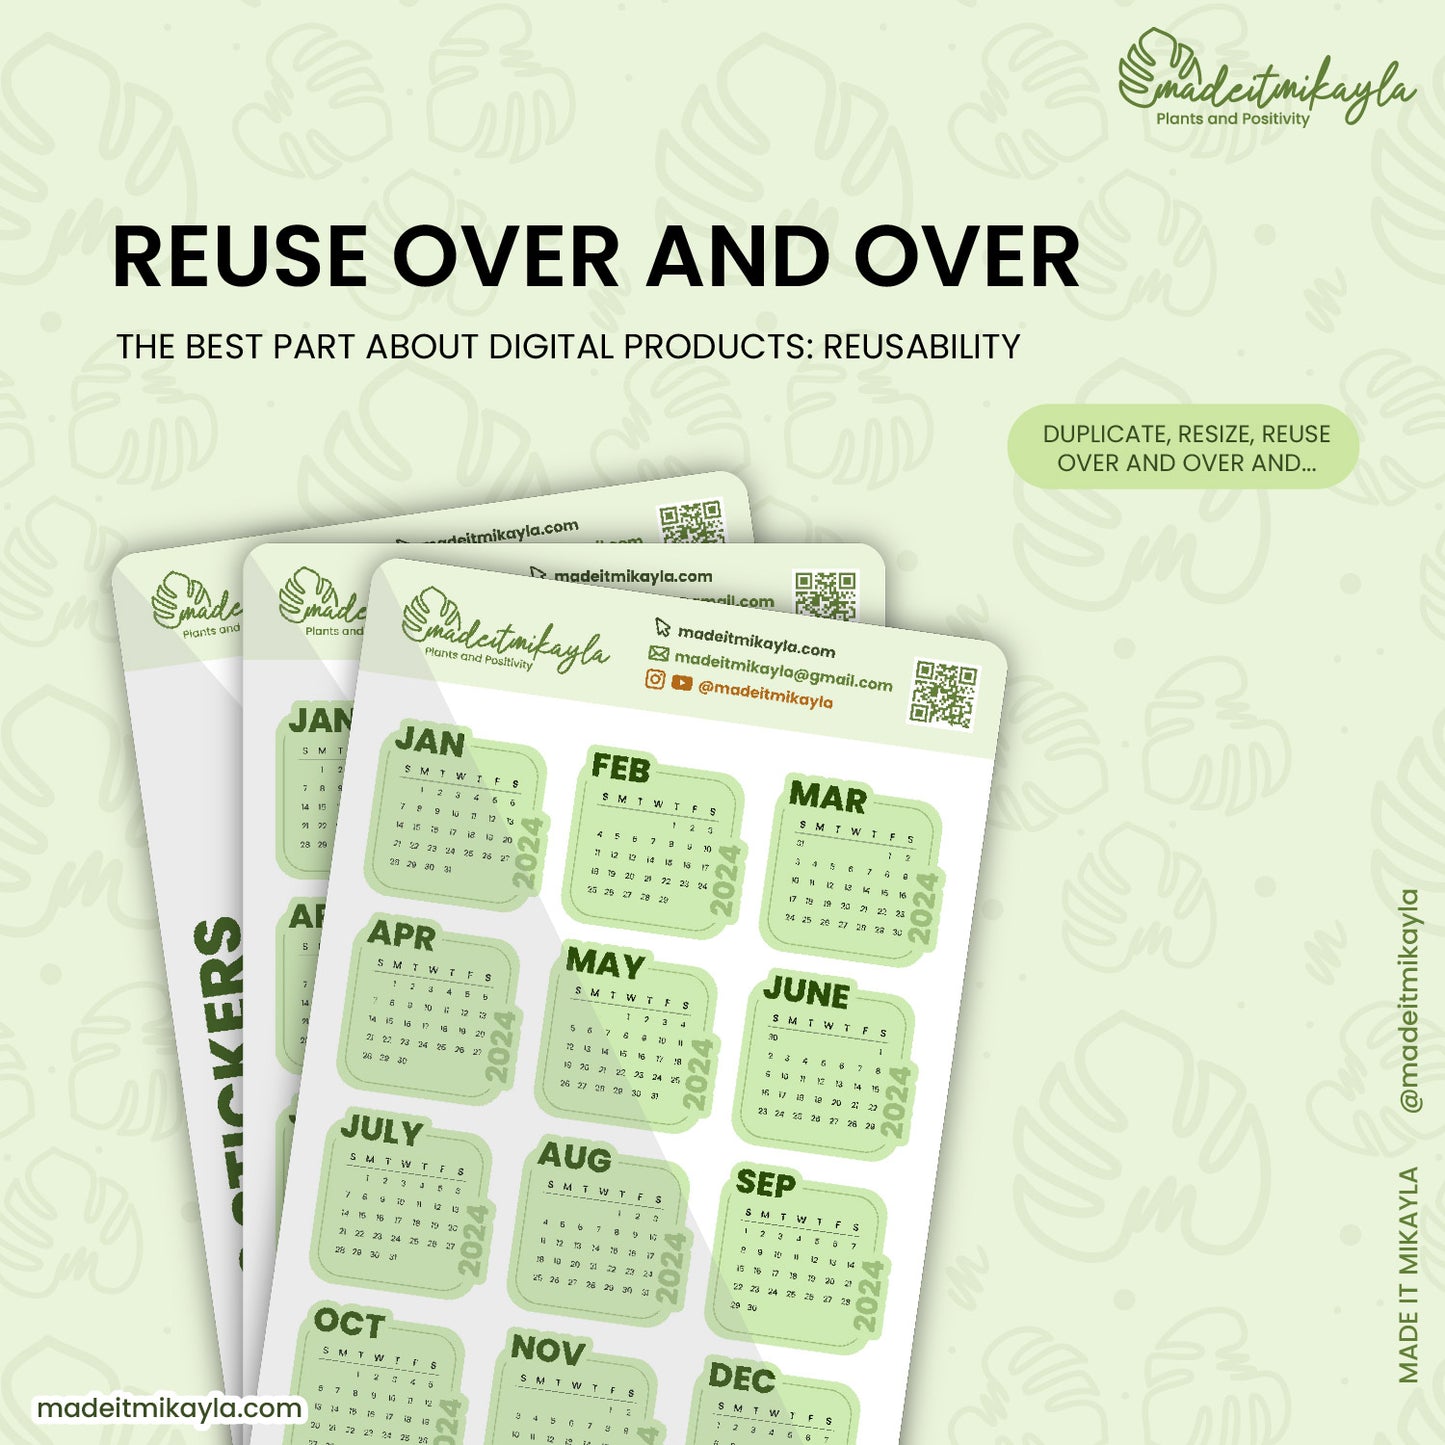 Green 2024 Calendars Digital Stickers | MadeItMikayla